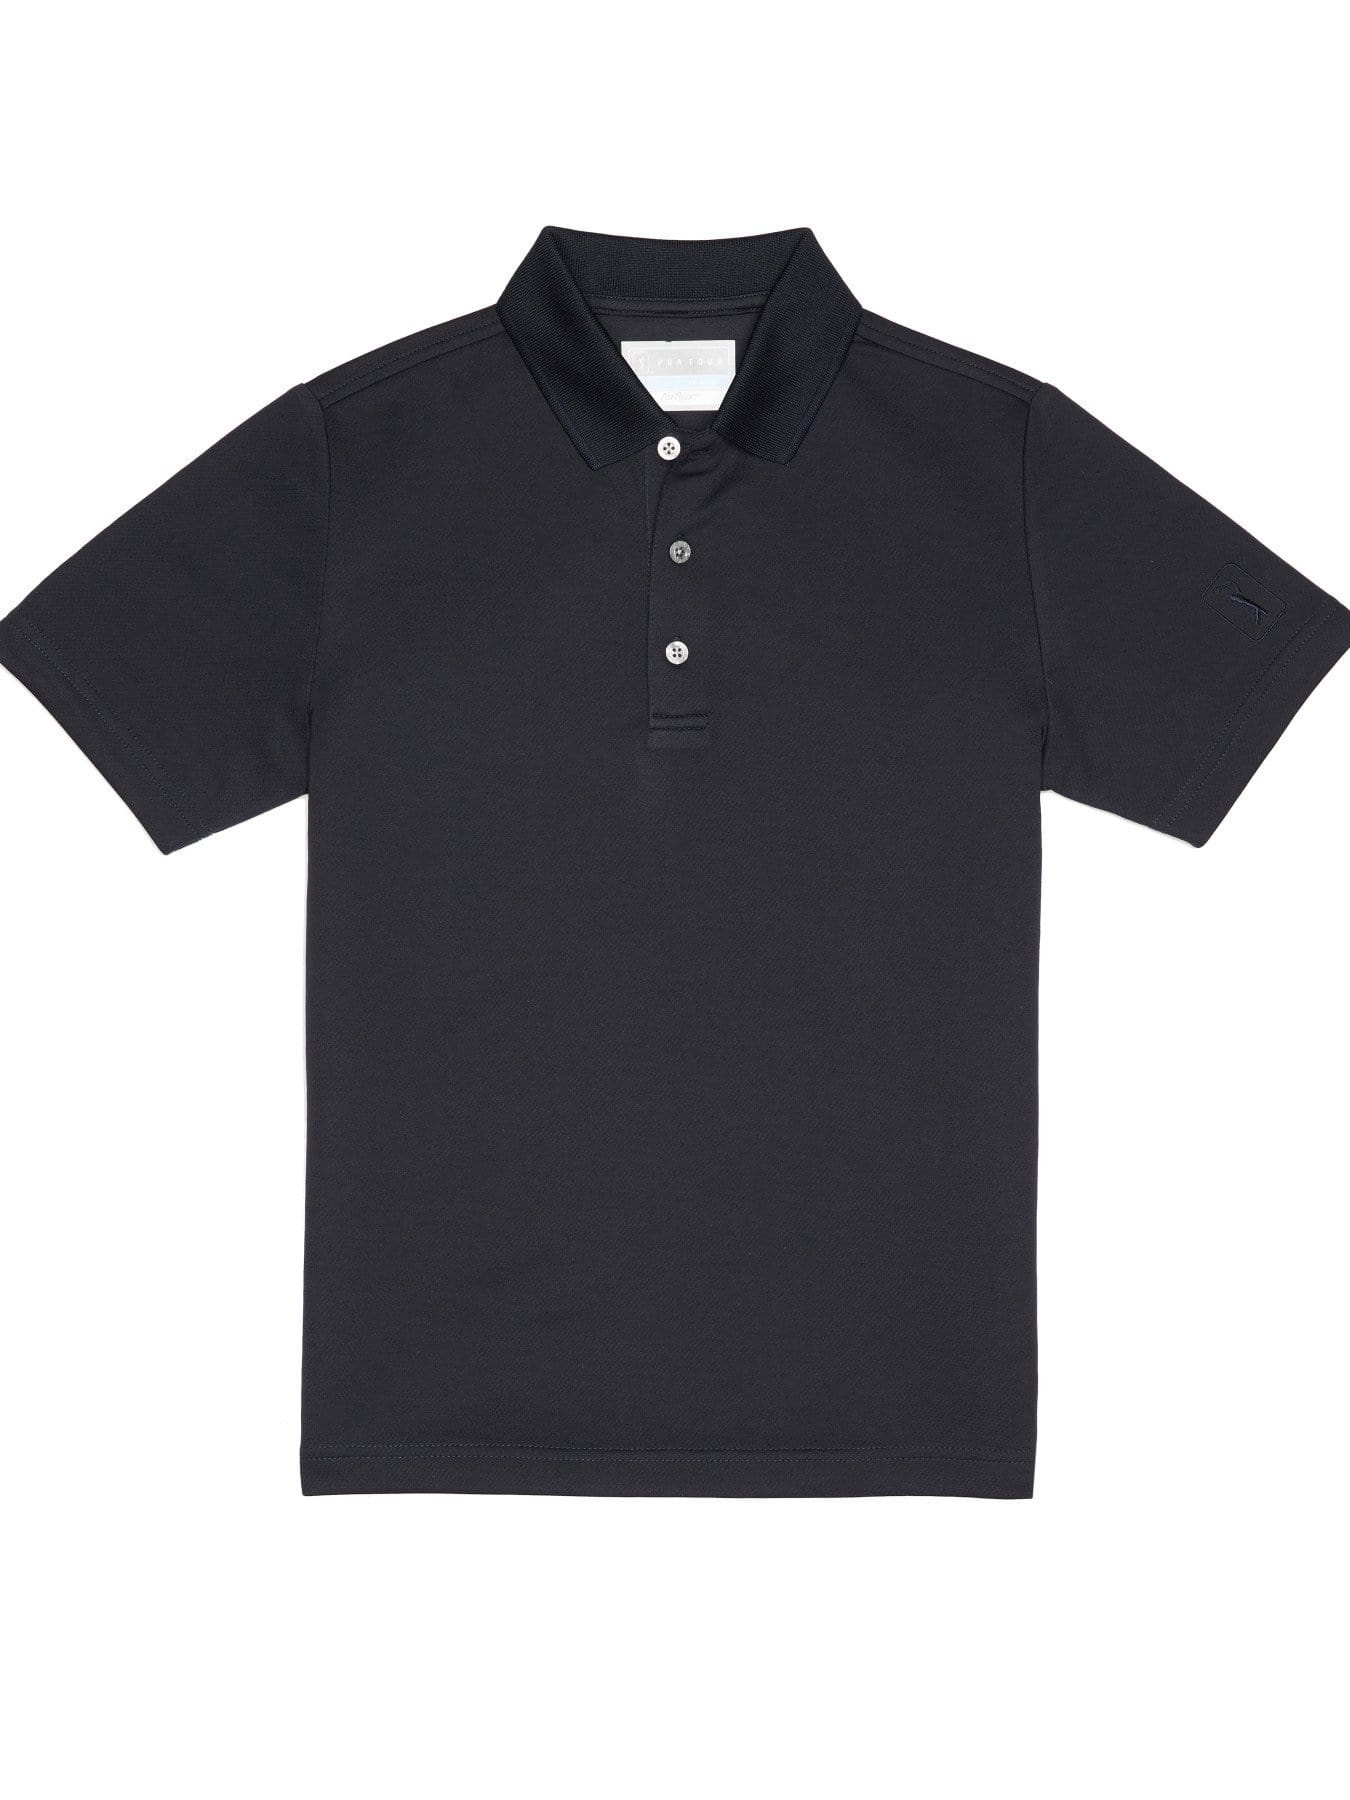 PGA TOUR Apparel Boys Short Sleeve AirFlux™ Polo Shirt, Size Large, True Navy Blue, 100% Polyester | Golf Apparel Shop